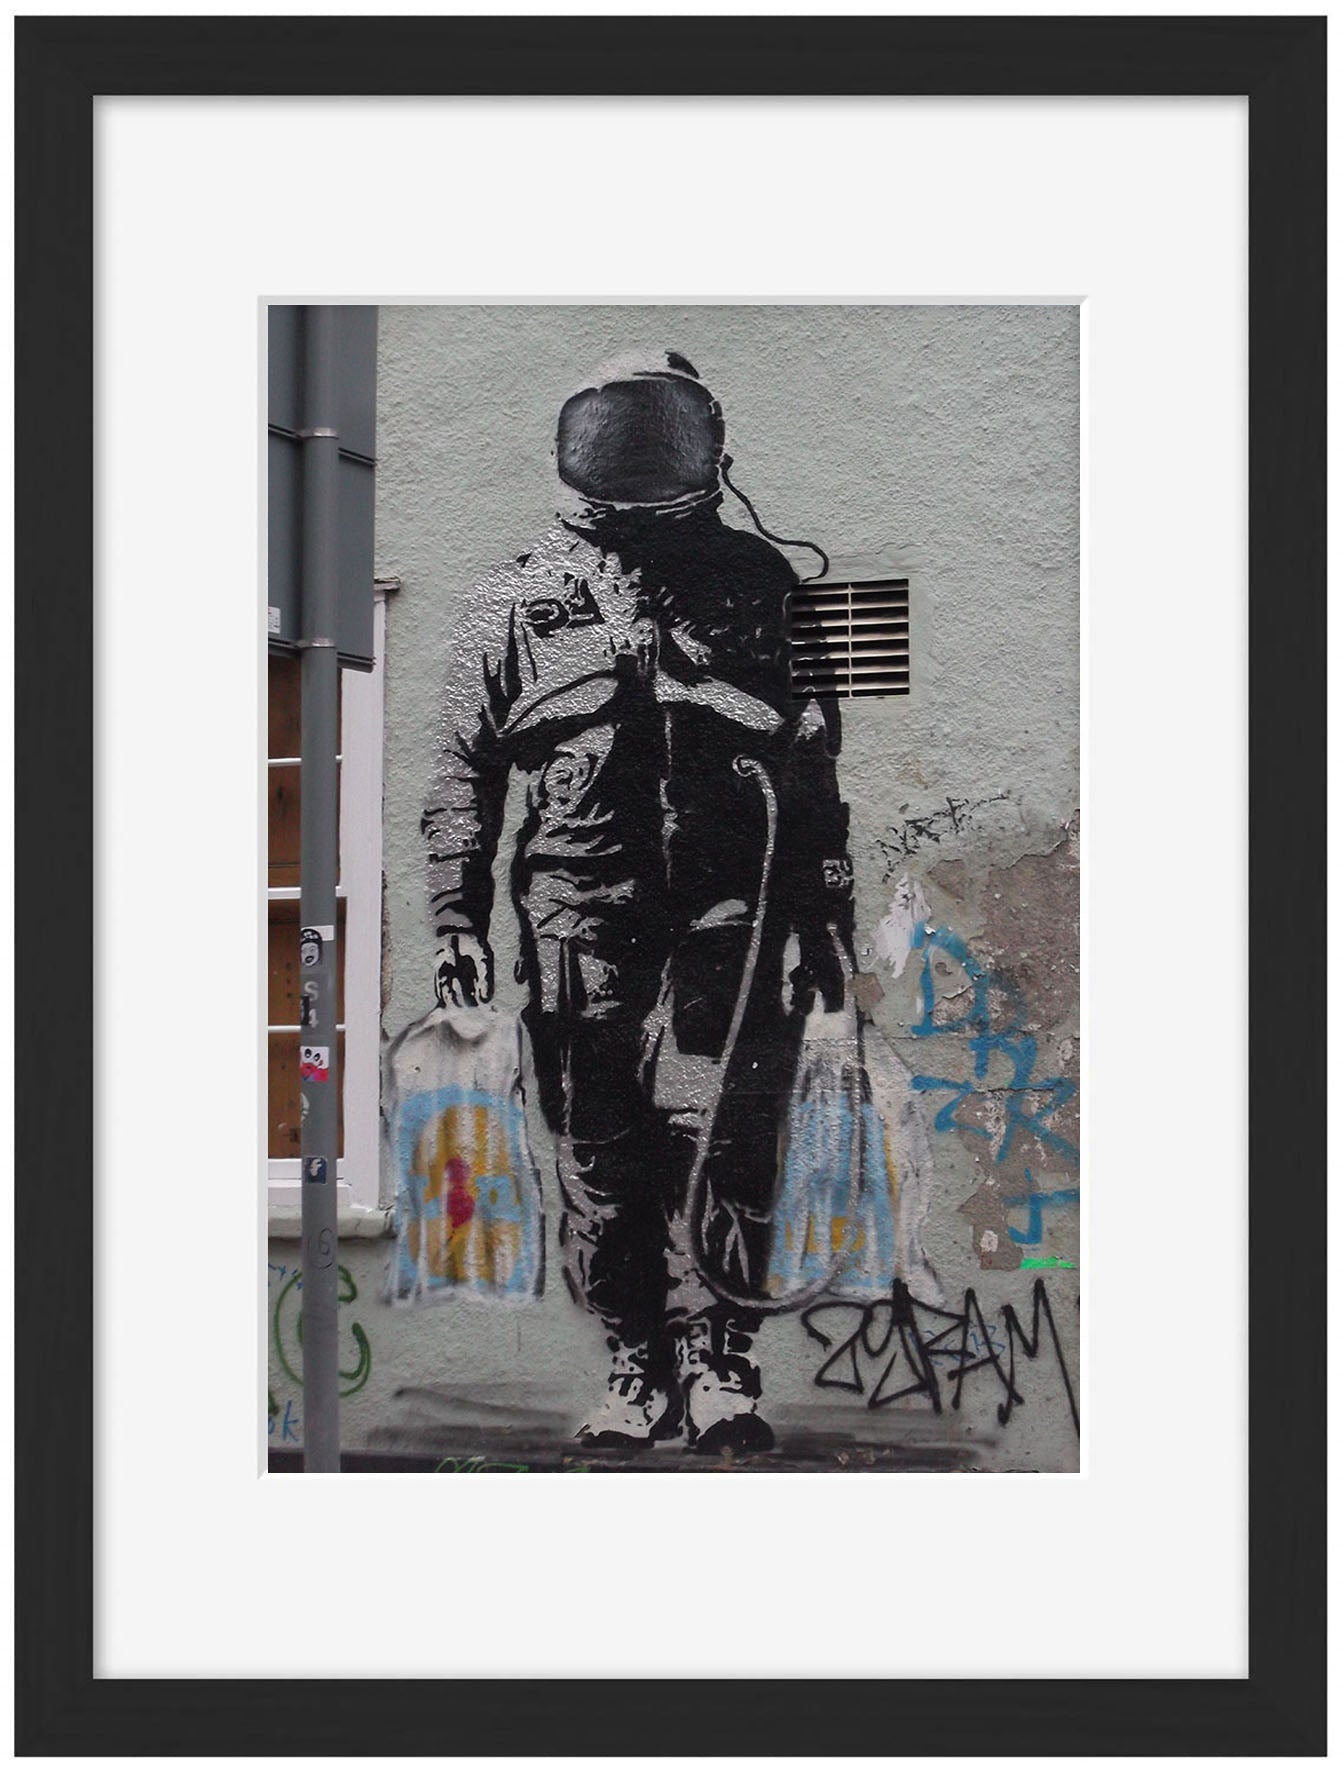 Shopping Astronaut-banksy, print-Framed Print-30 x 40 cm-BLUE SHAKER